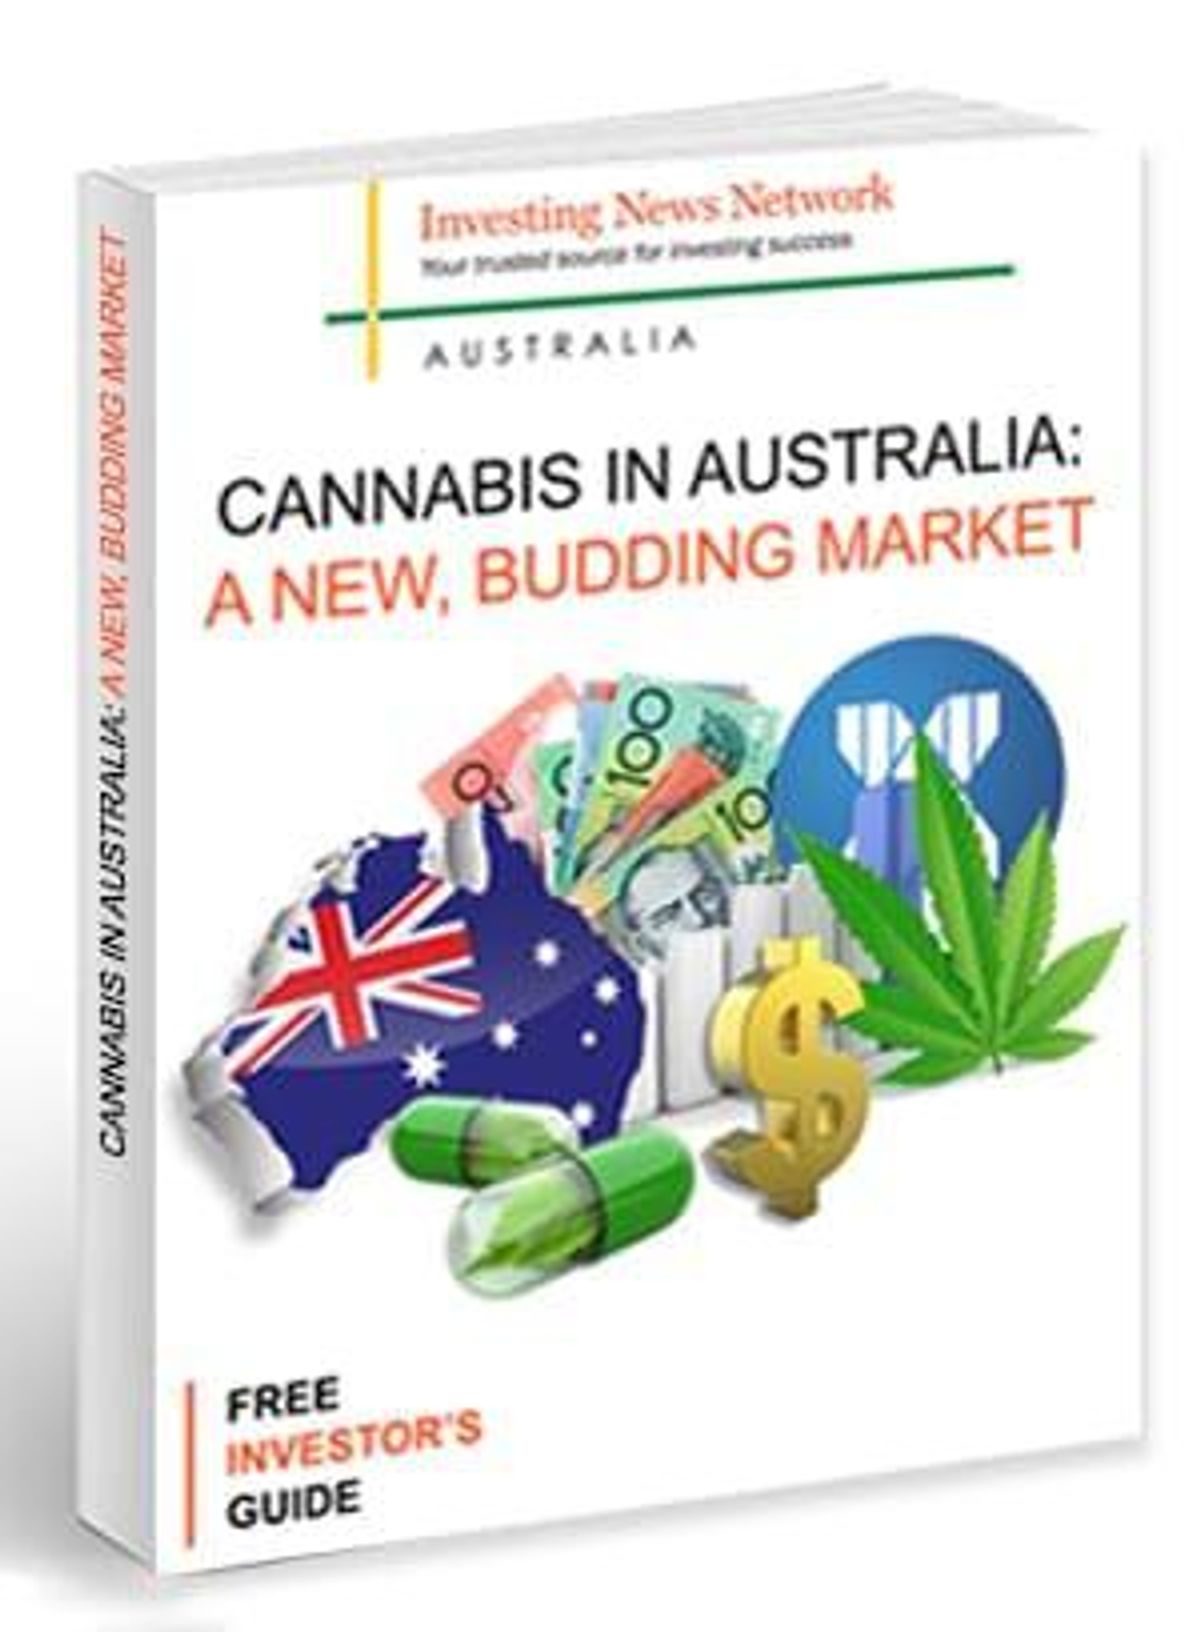 Cannabis in Australia: A New, Budding Market